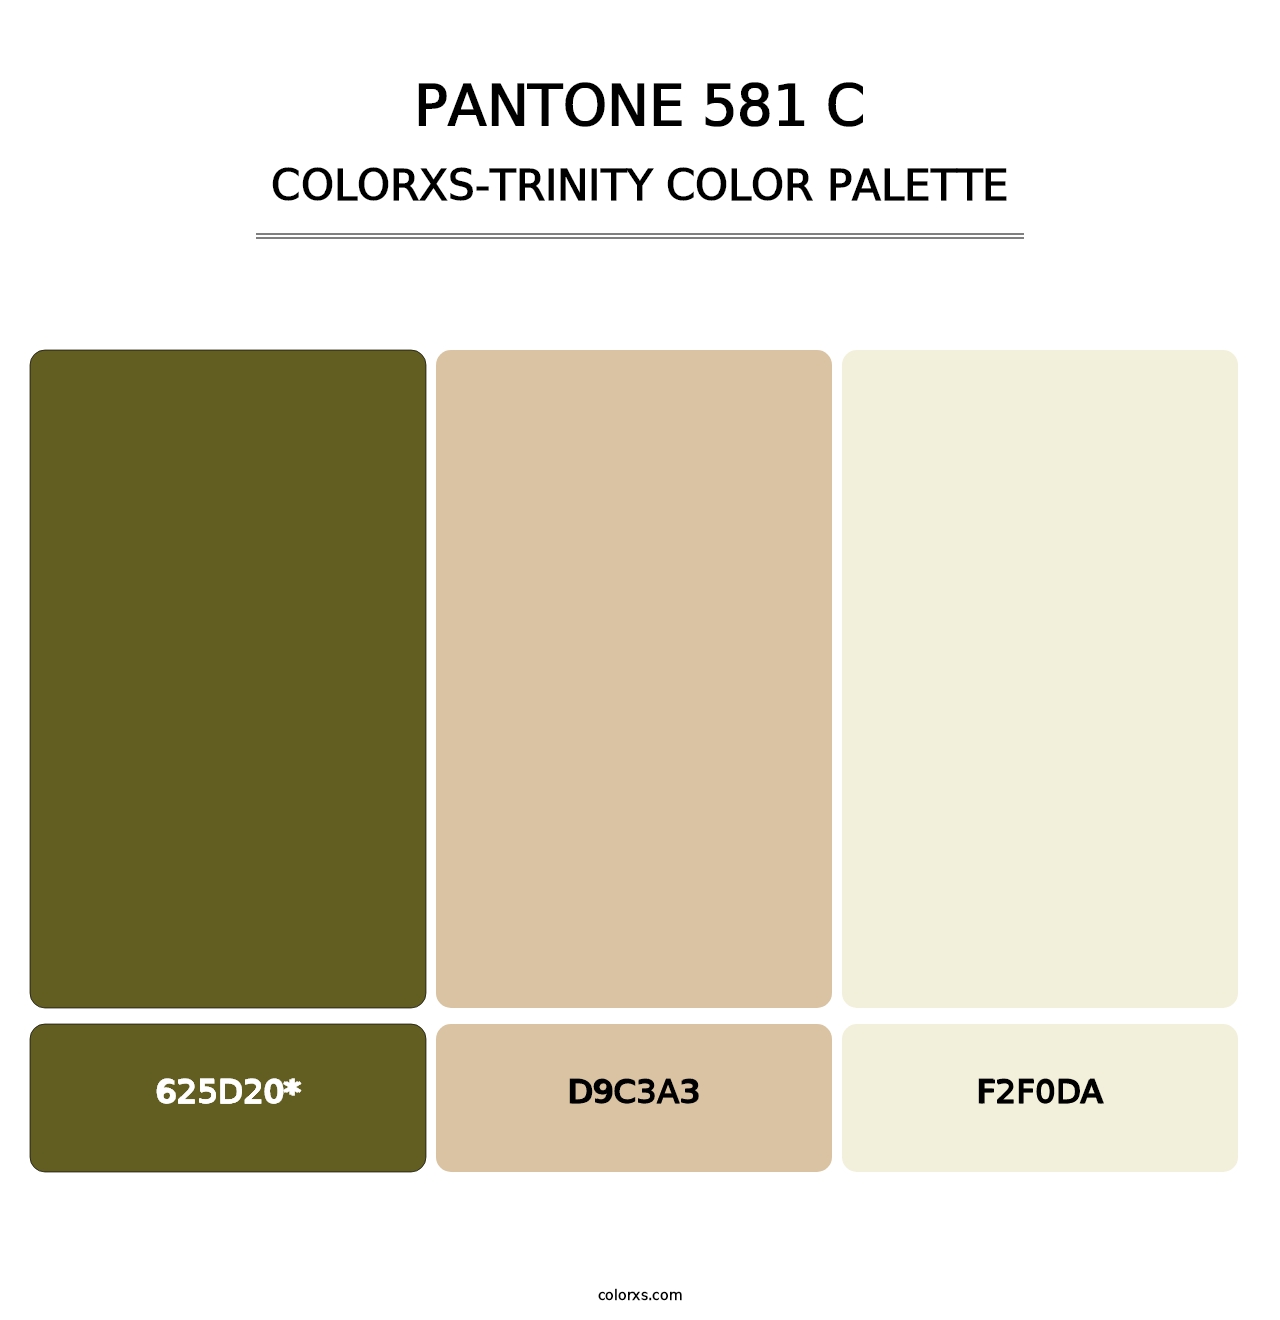 PANTONE 581 C - Colorxs Trinity Palette